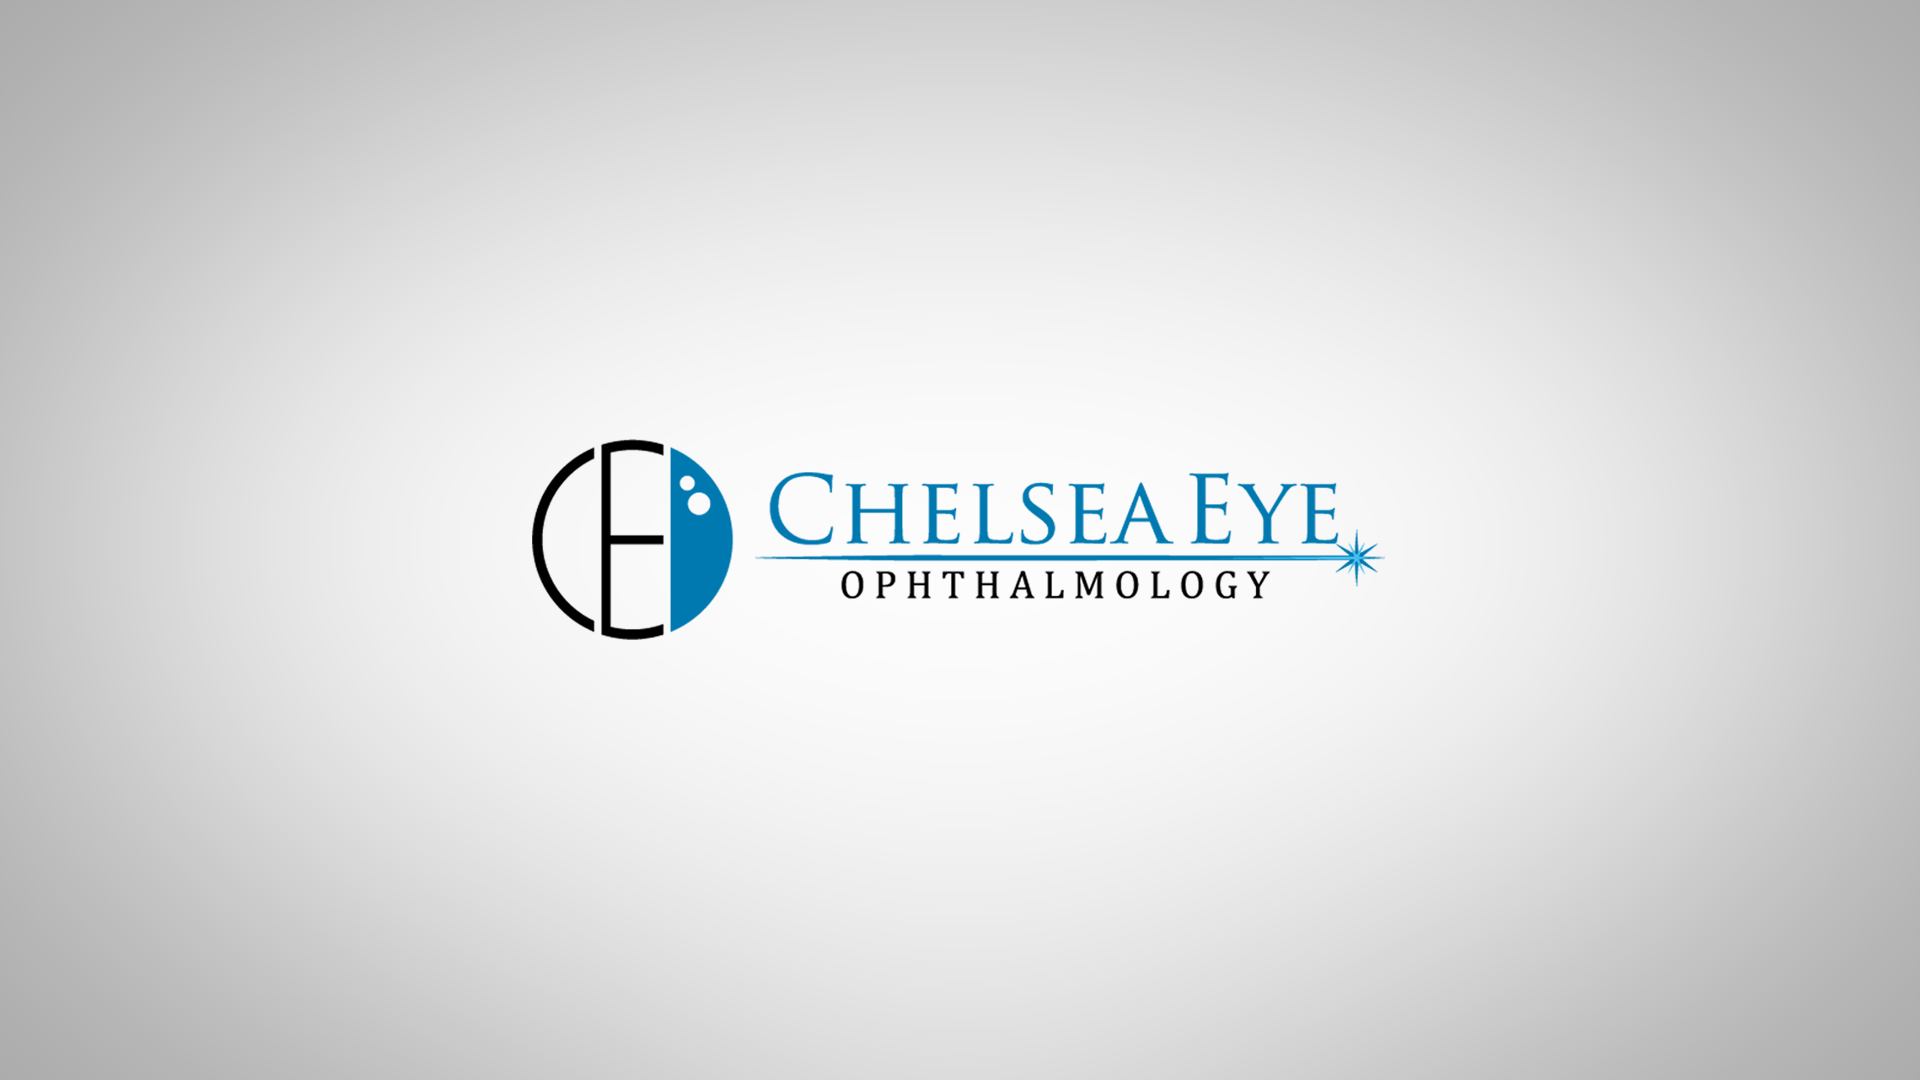 Chelsea Eye Ophthalmology